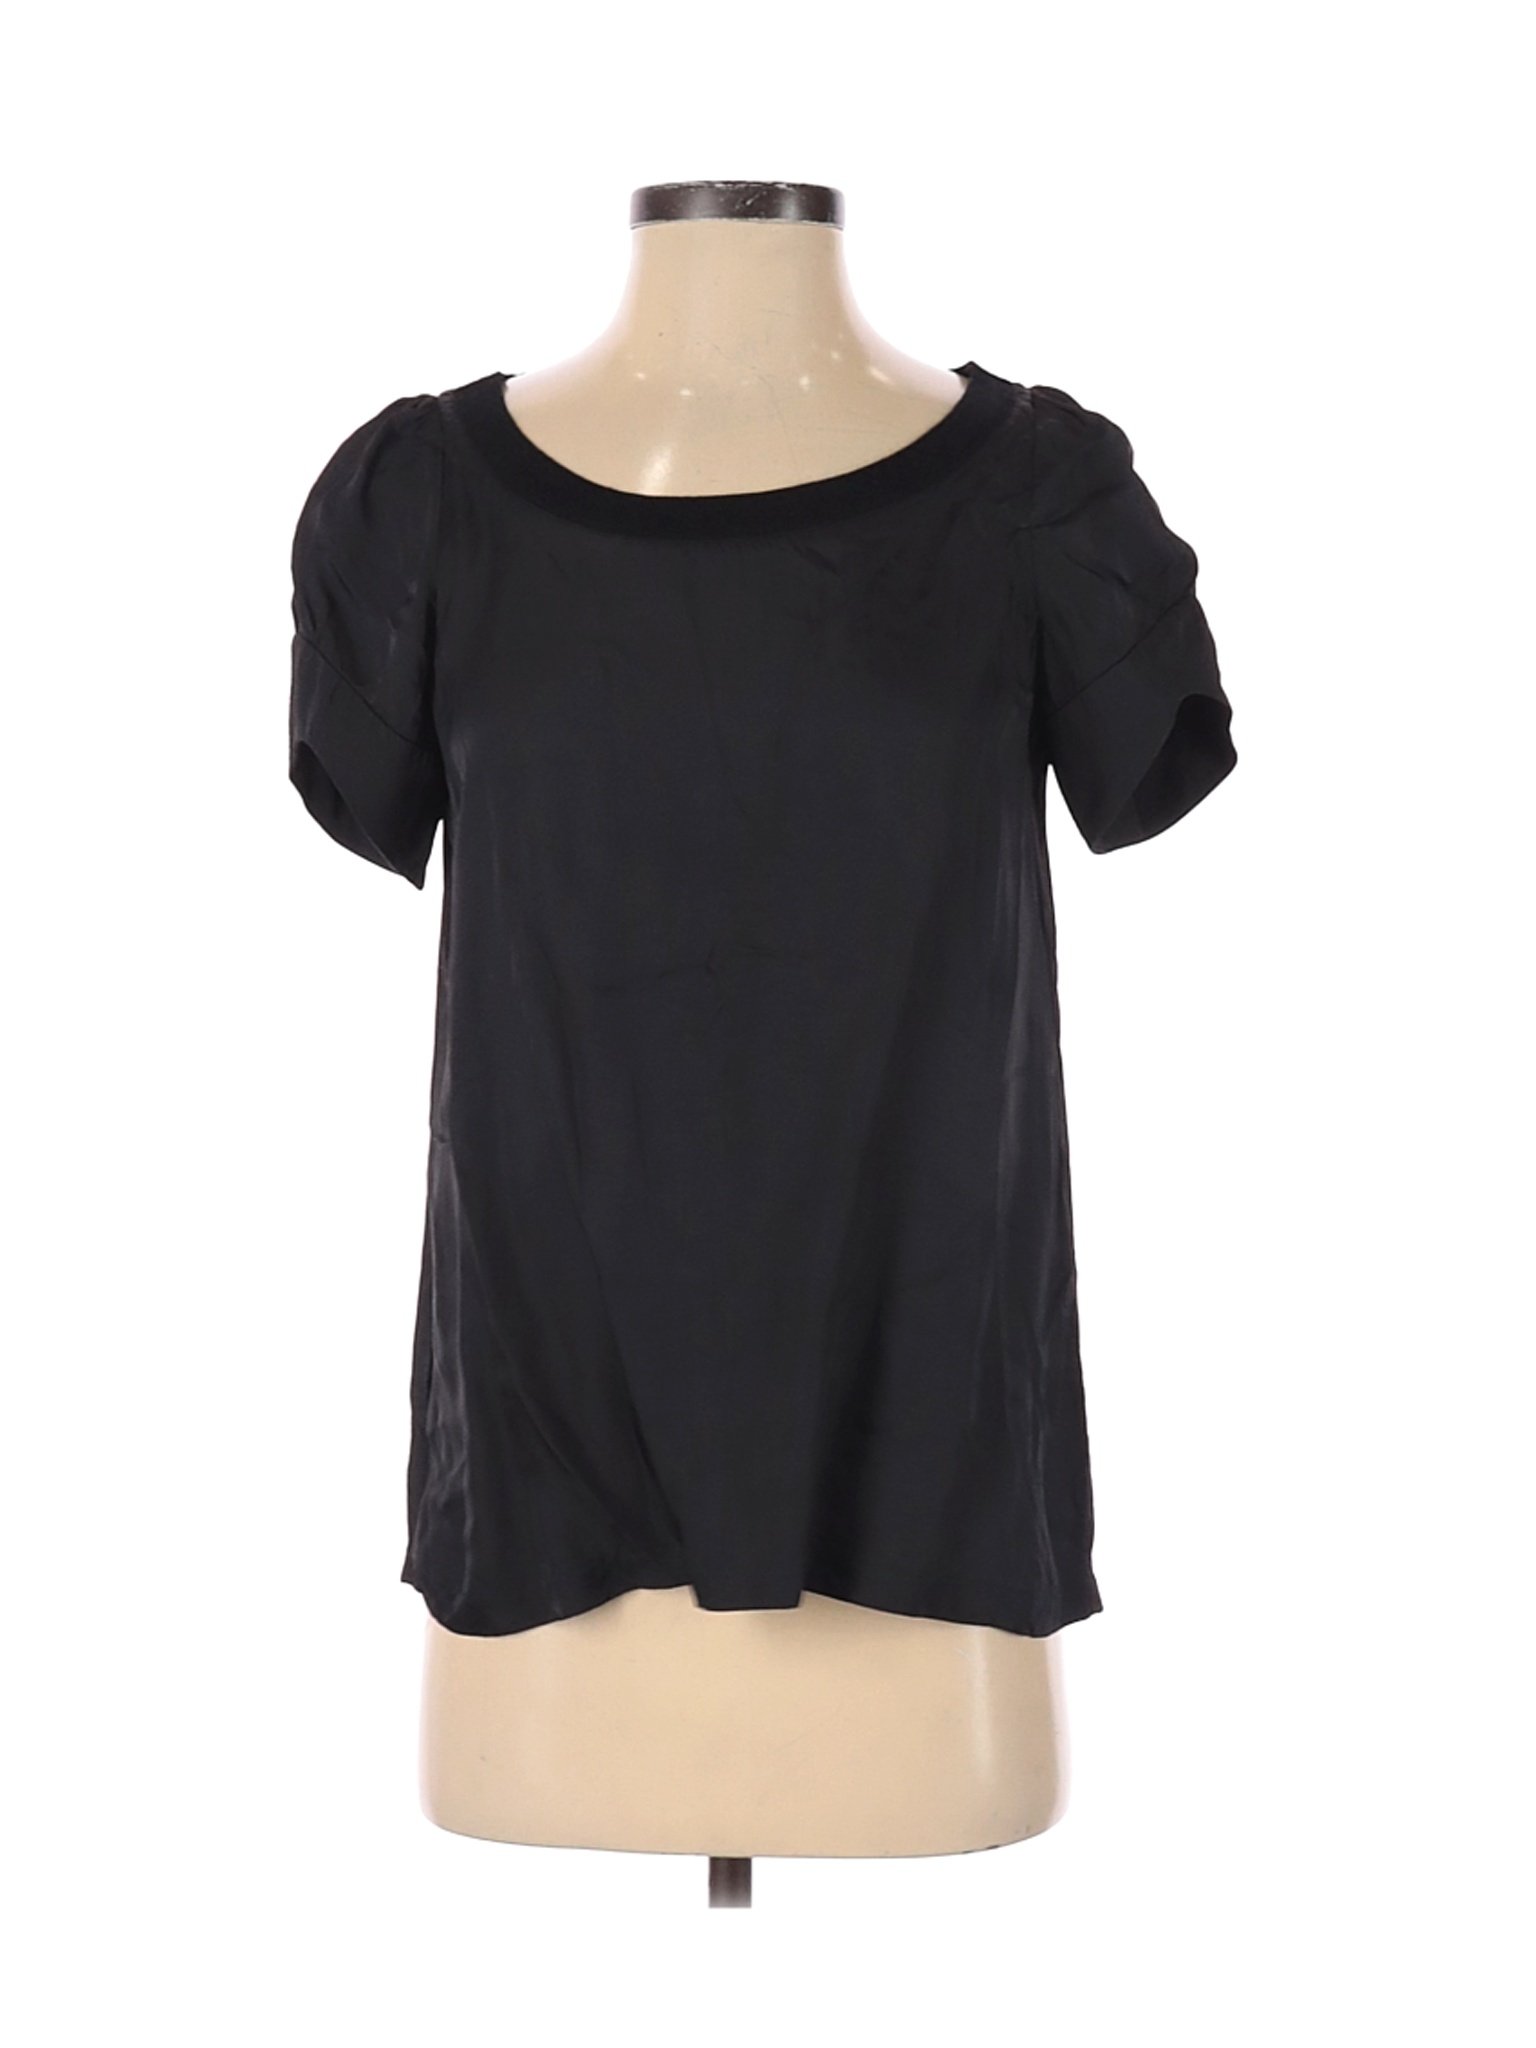 Club Monaco Women Black Short Sleeve Blouse S | eBay